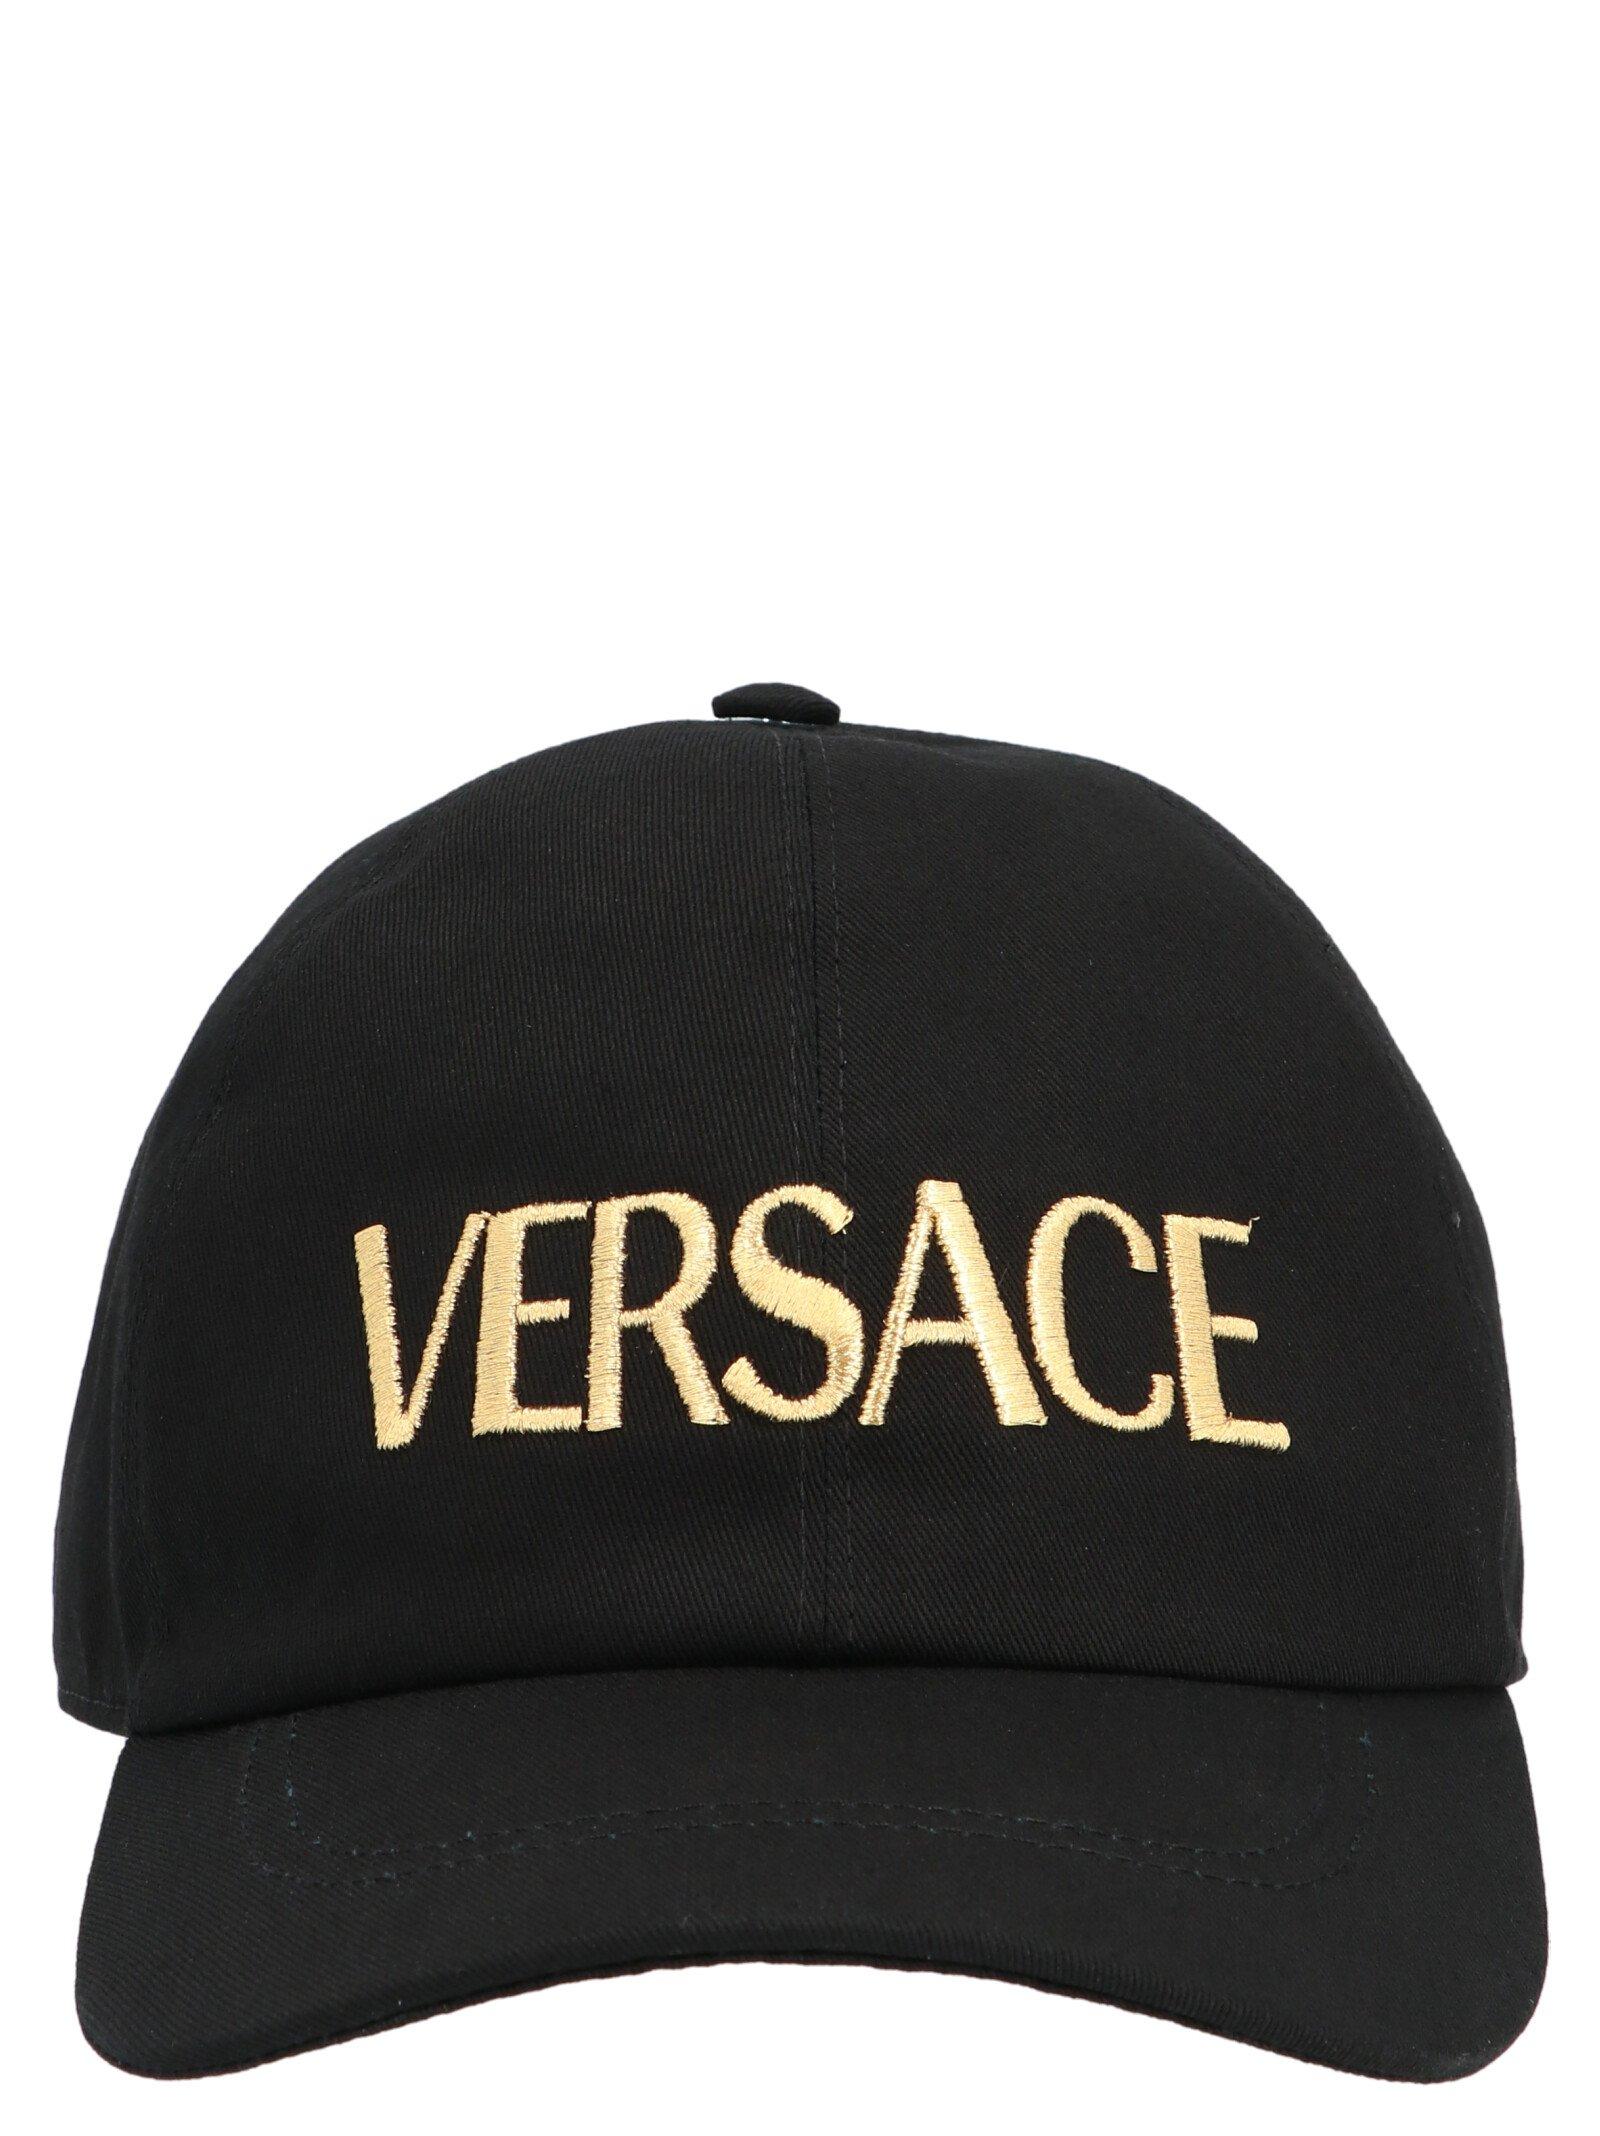 Versace Cotton Logo Baseball Cap in Black for Men - Lyst